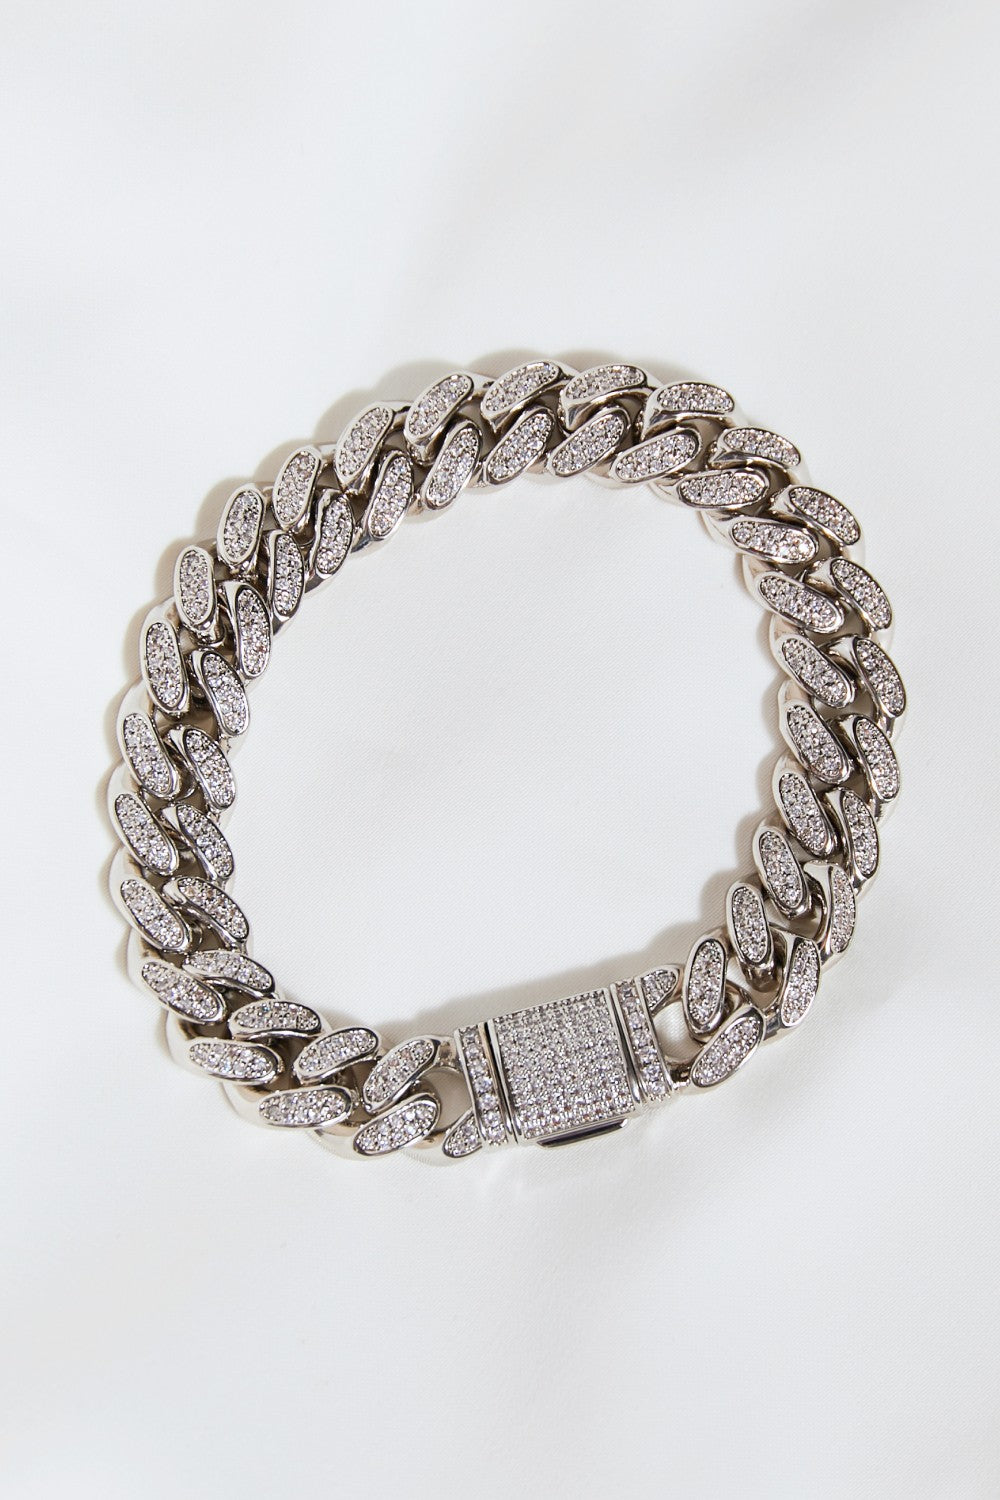 Curb Chain Bracelet - Tigbul's Variety Fashion Shop